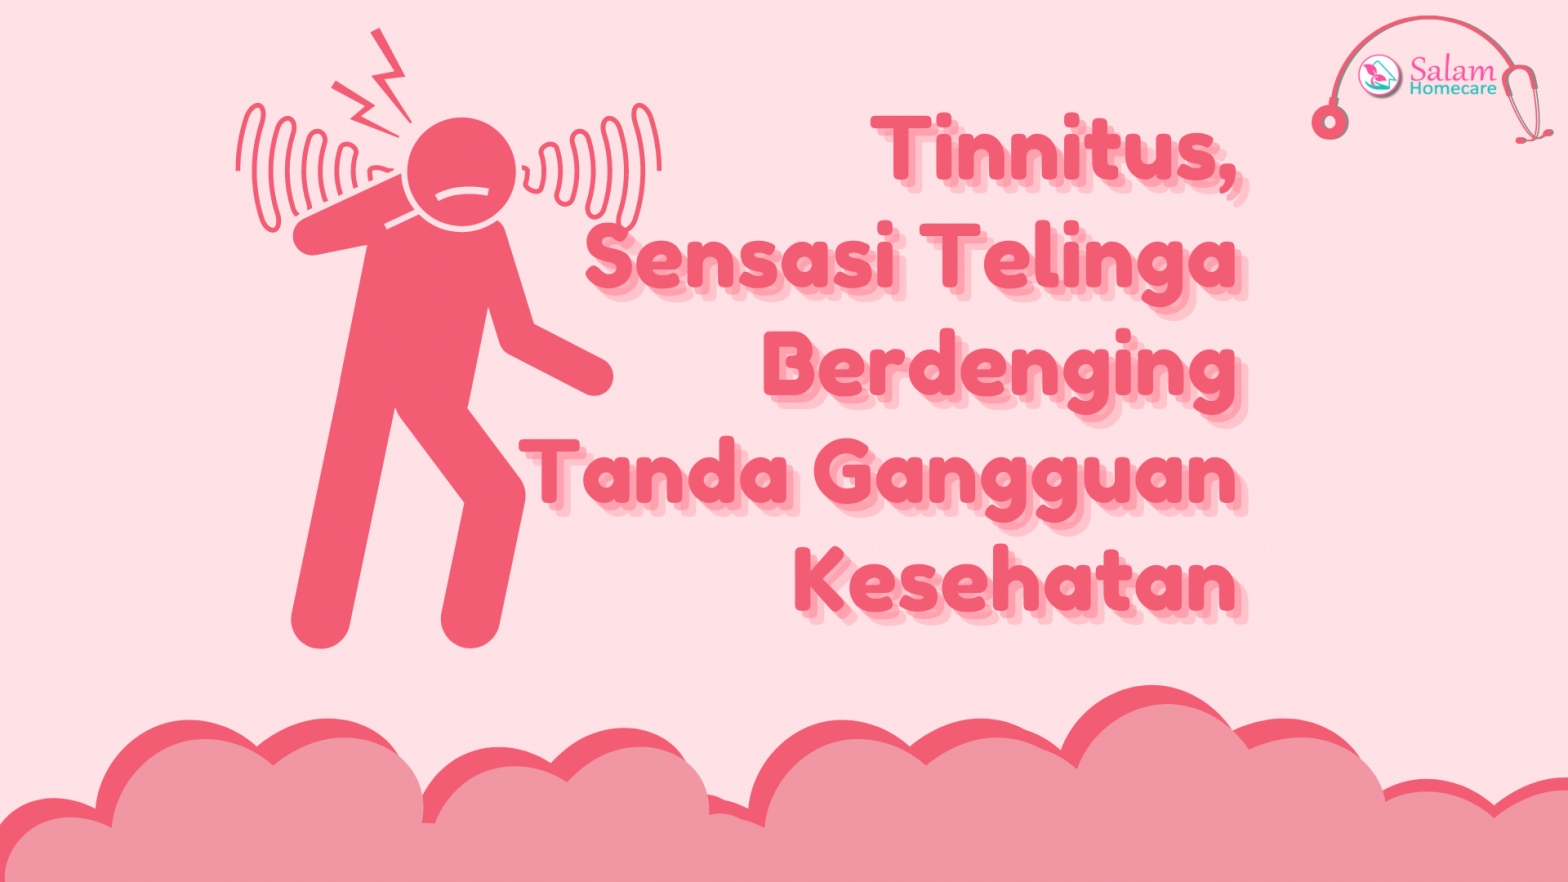 Tinnitus, Sensasi Telinga Berdenging Tanda Gangguan Kesehatan